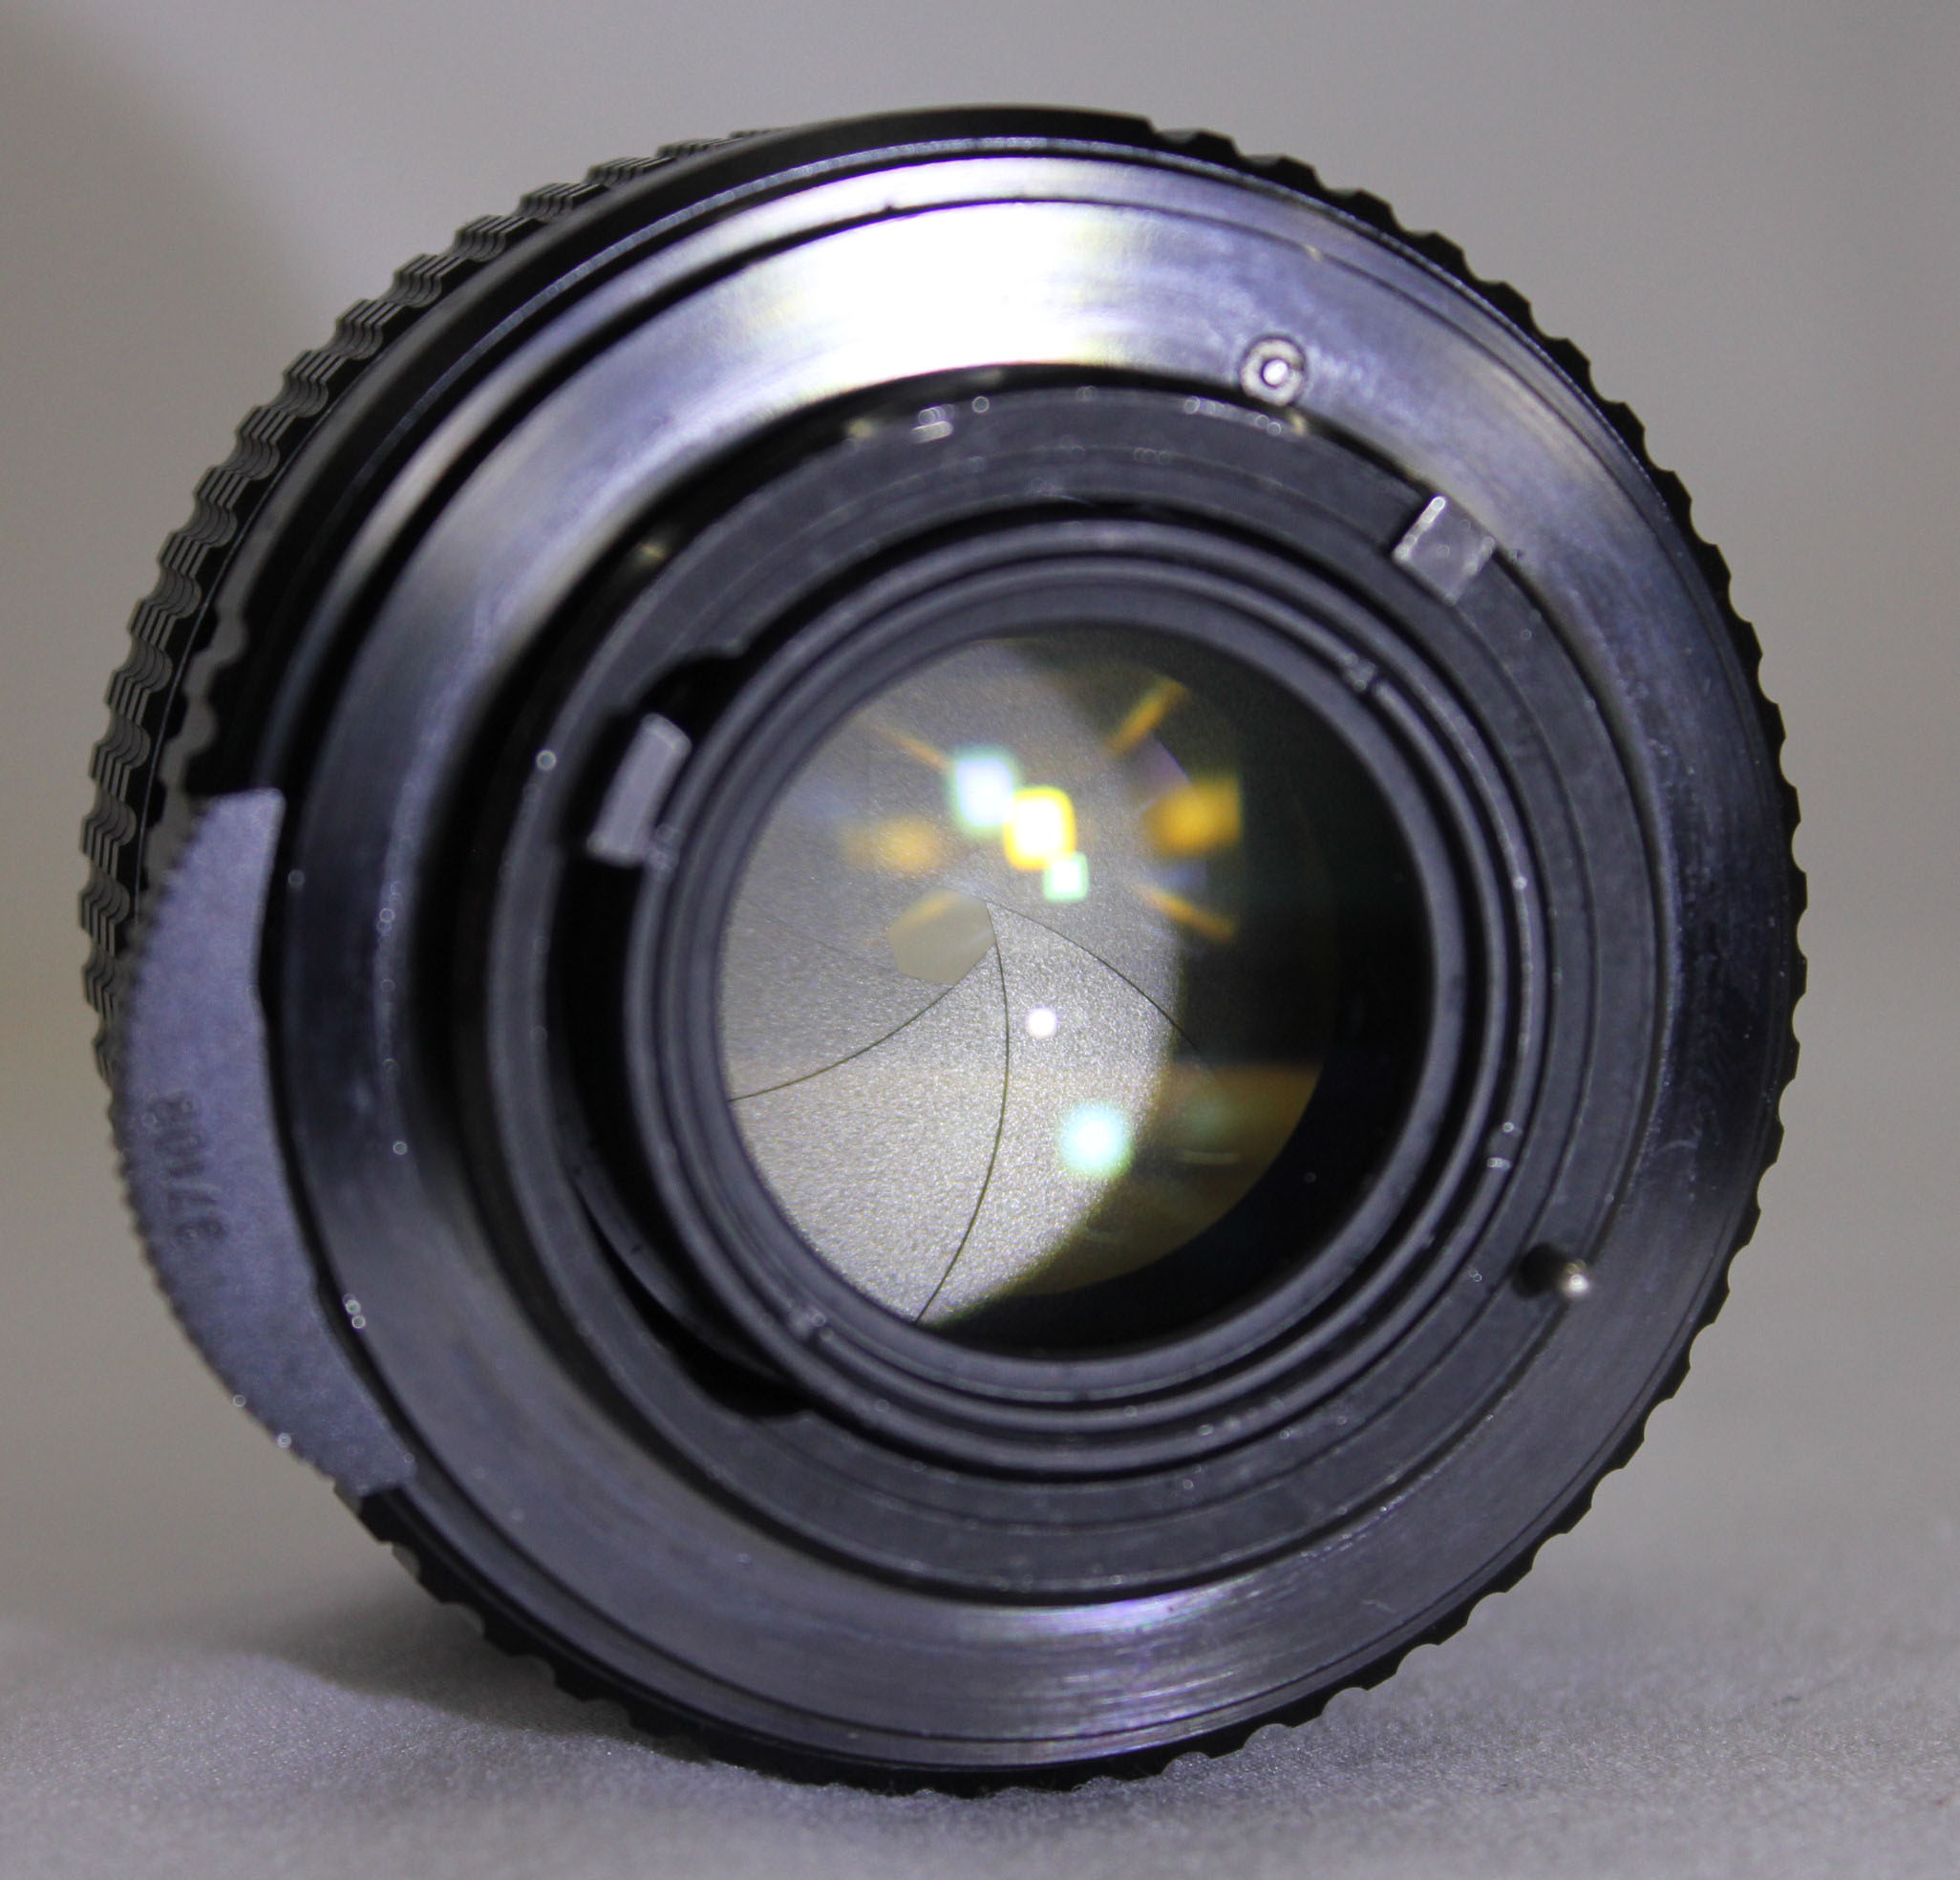 Asahi Pentax Spotmatic F SPF 35mm SLR Camera w/ SMC Takumar 55mm F/1.8 Lens from Japan Photo 19